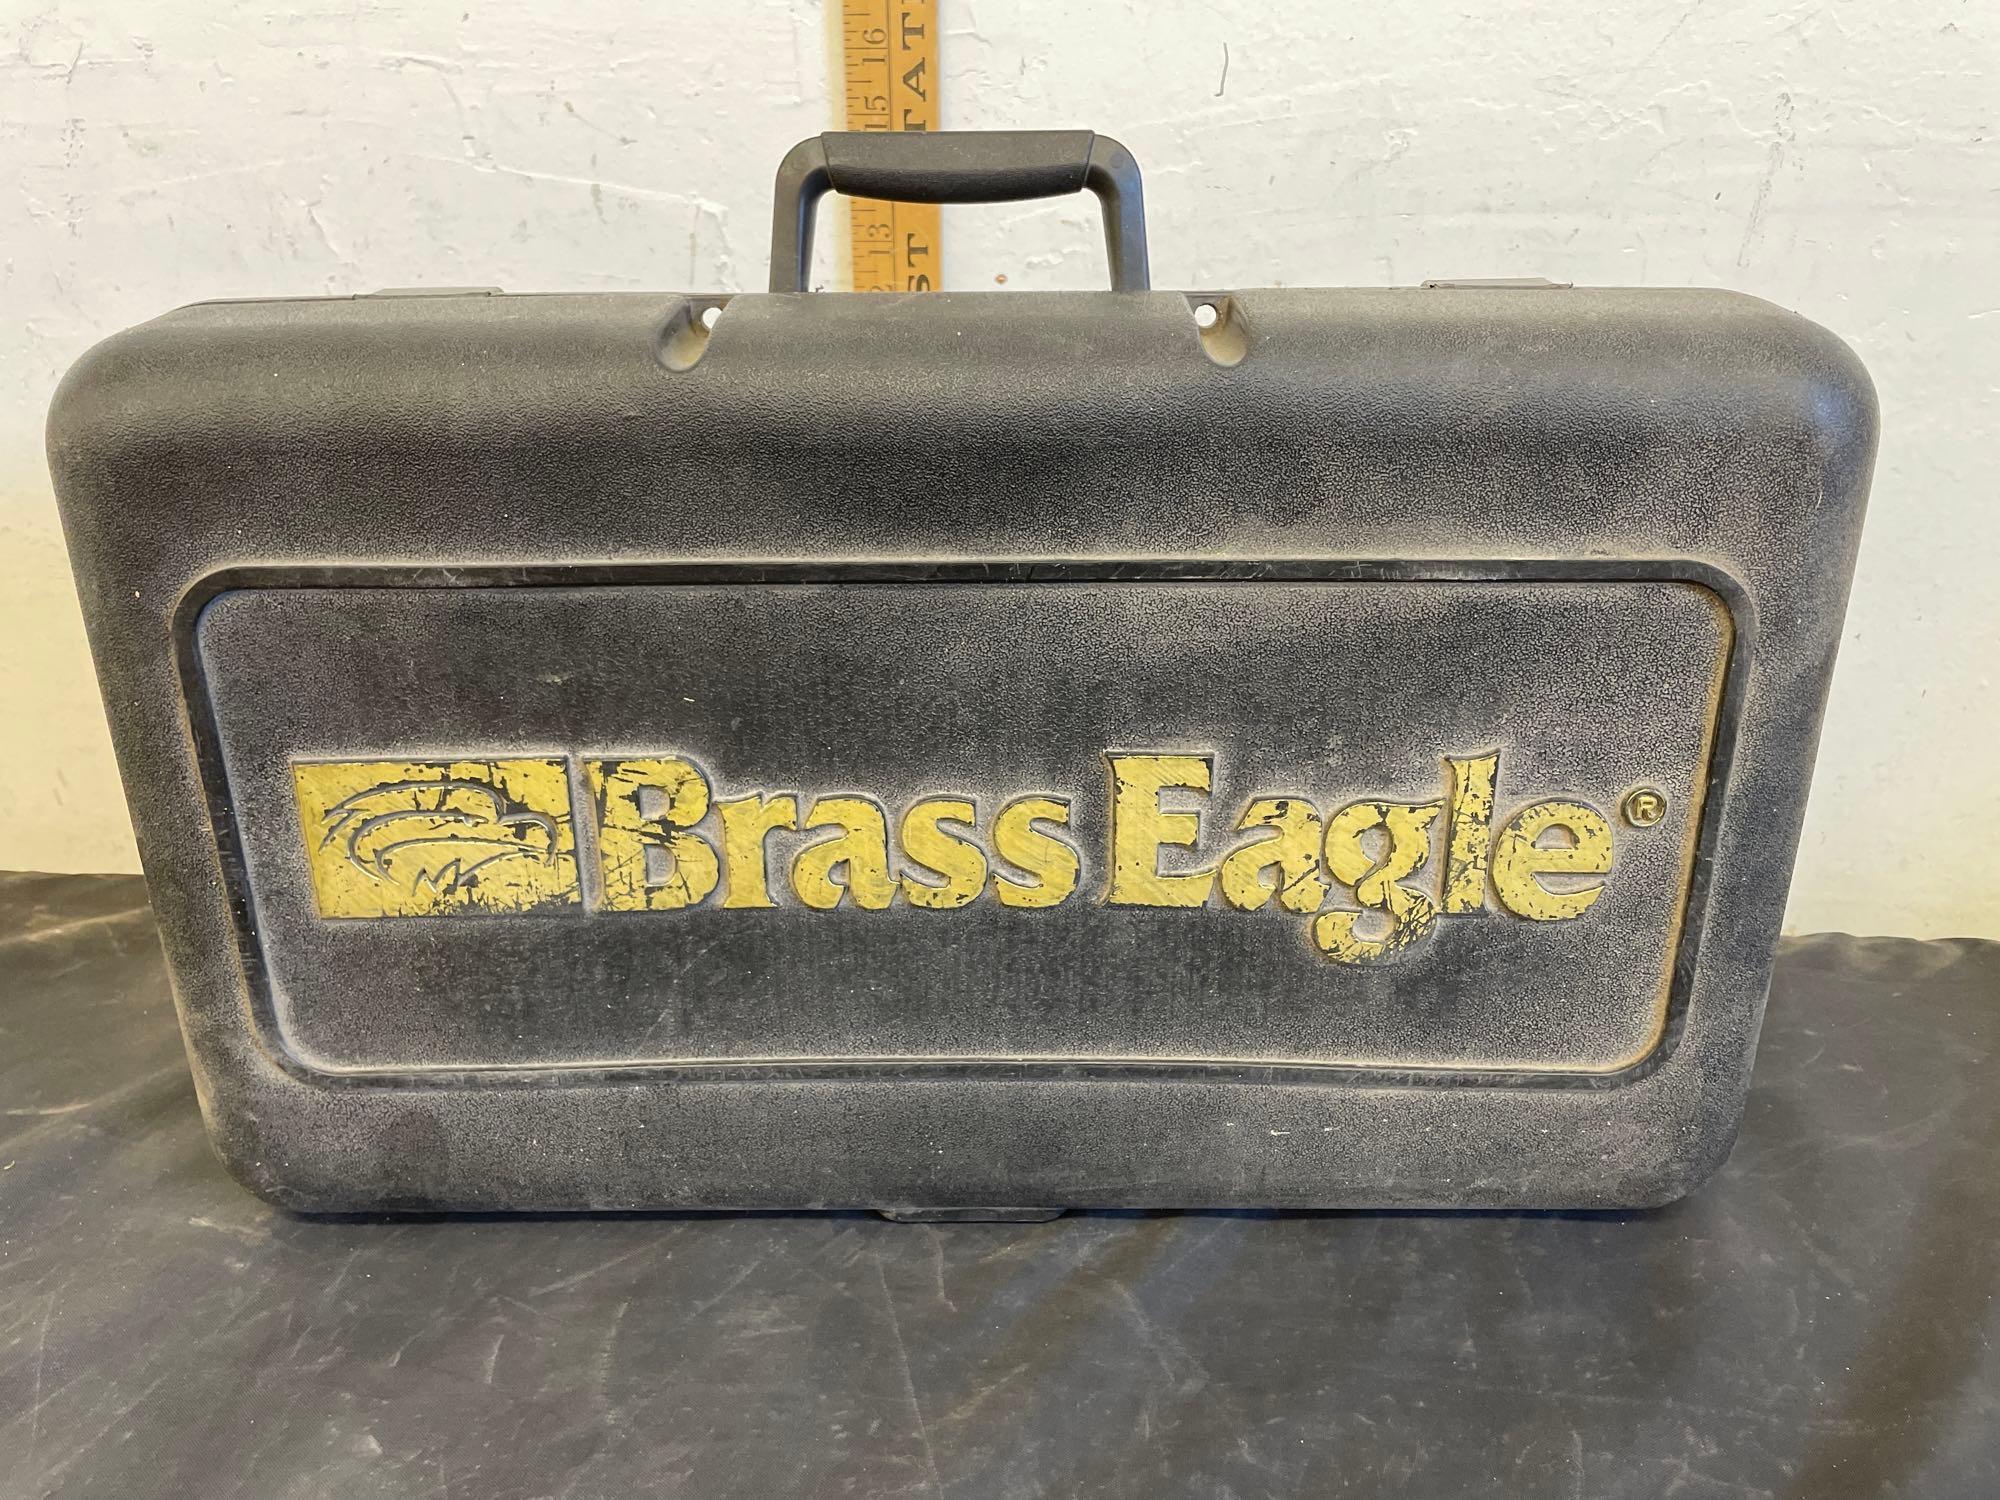 Brass Eagle Eradicator